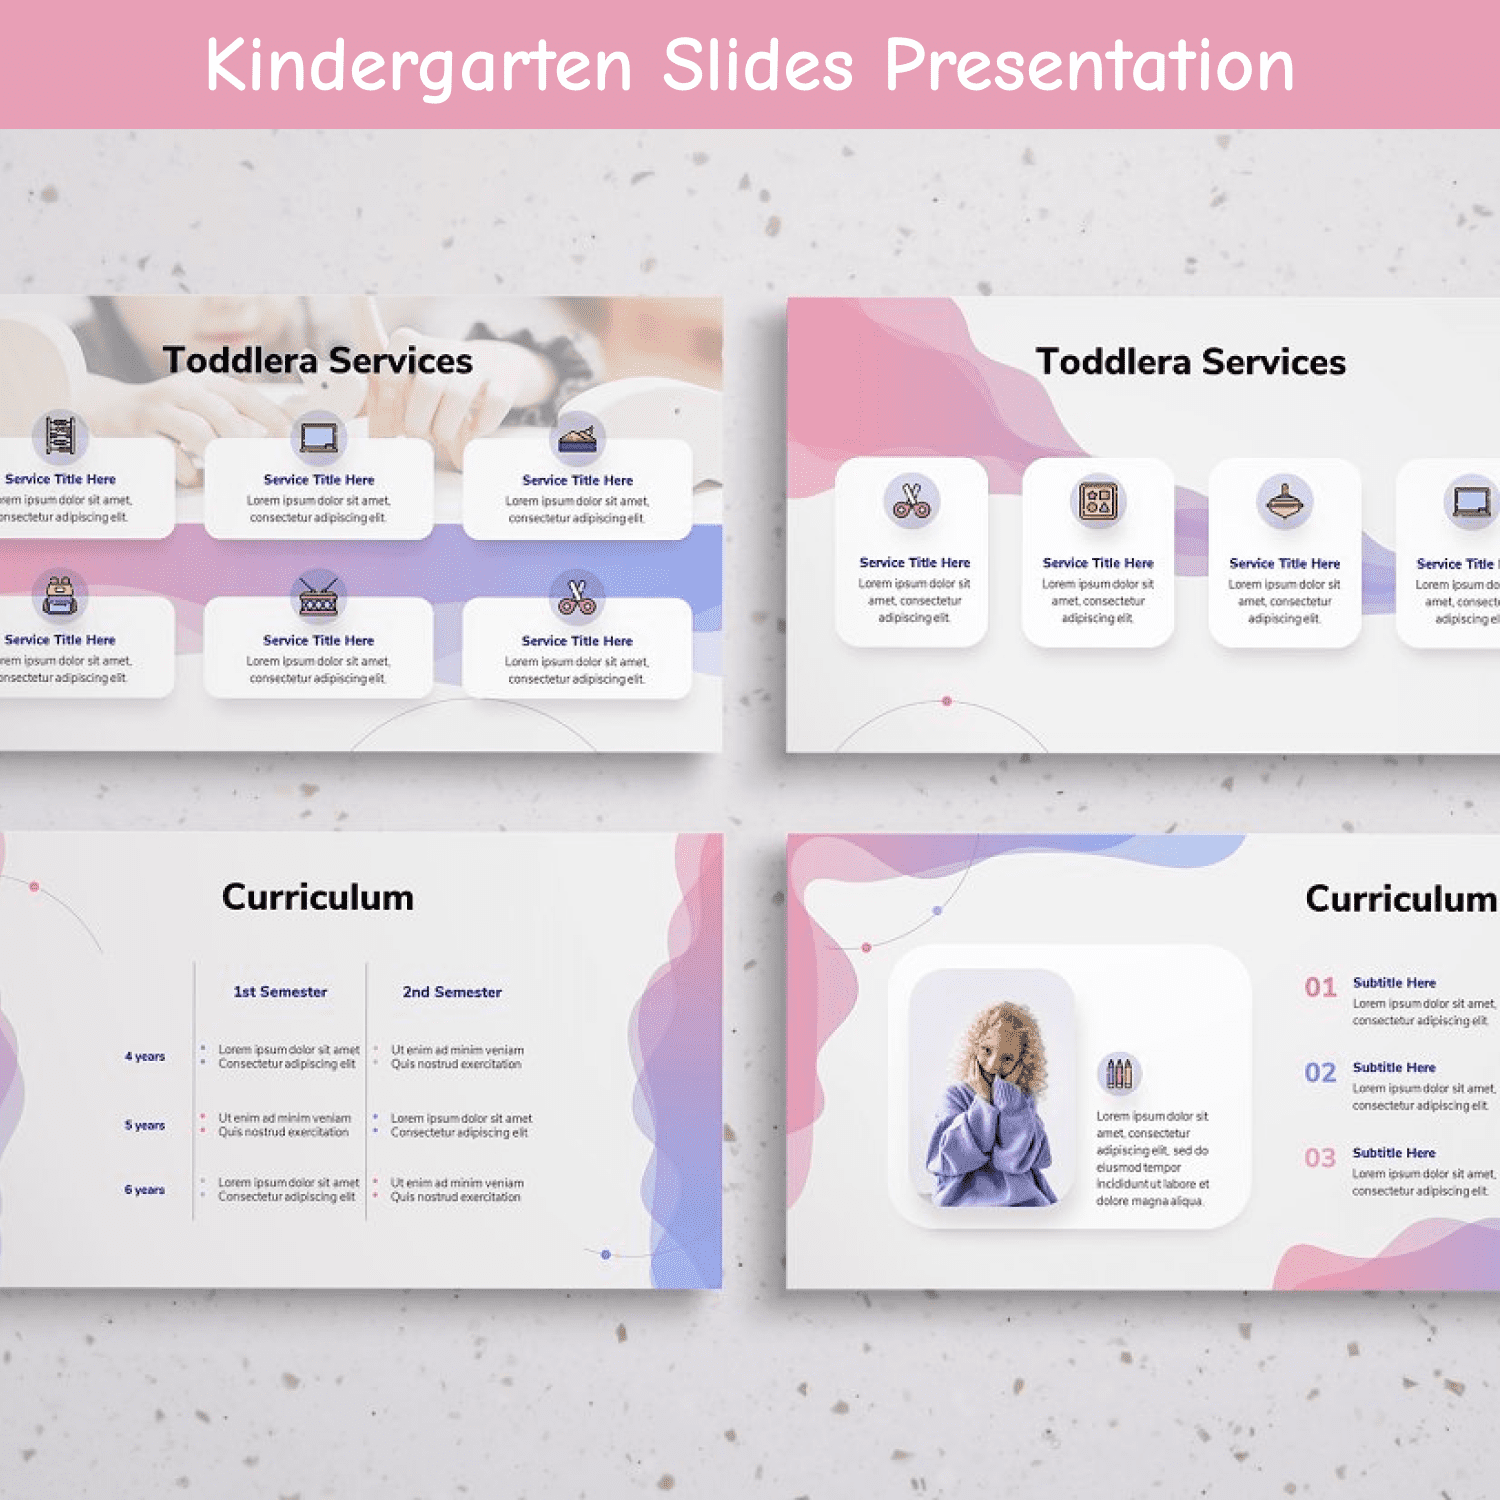 Kindergarten Slides Presentation.